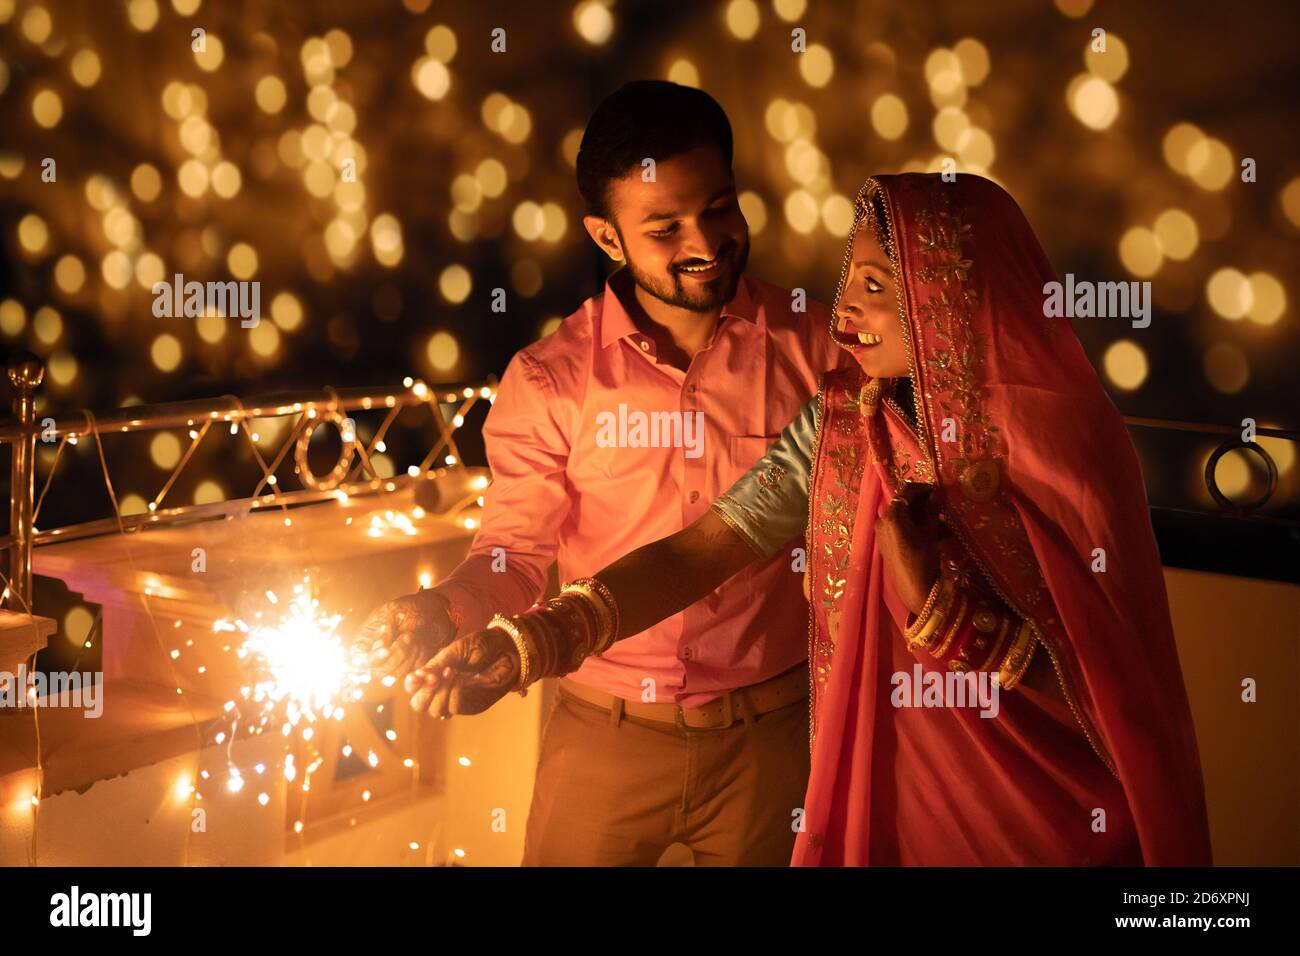 Pin by Brijesh Kalra on shaya | Wedding couple poses photography, Pre  wedding photoshoot outdoor, Photo poses for couples